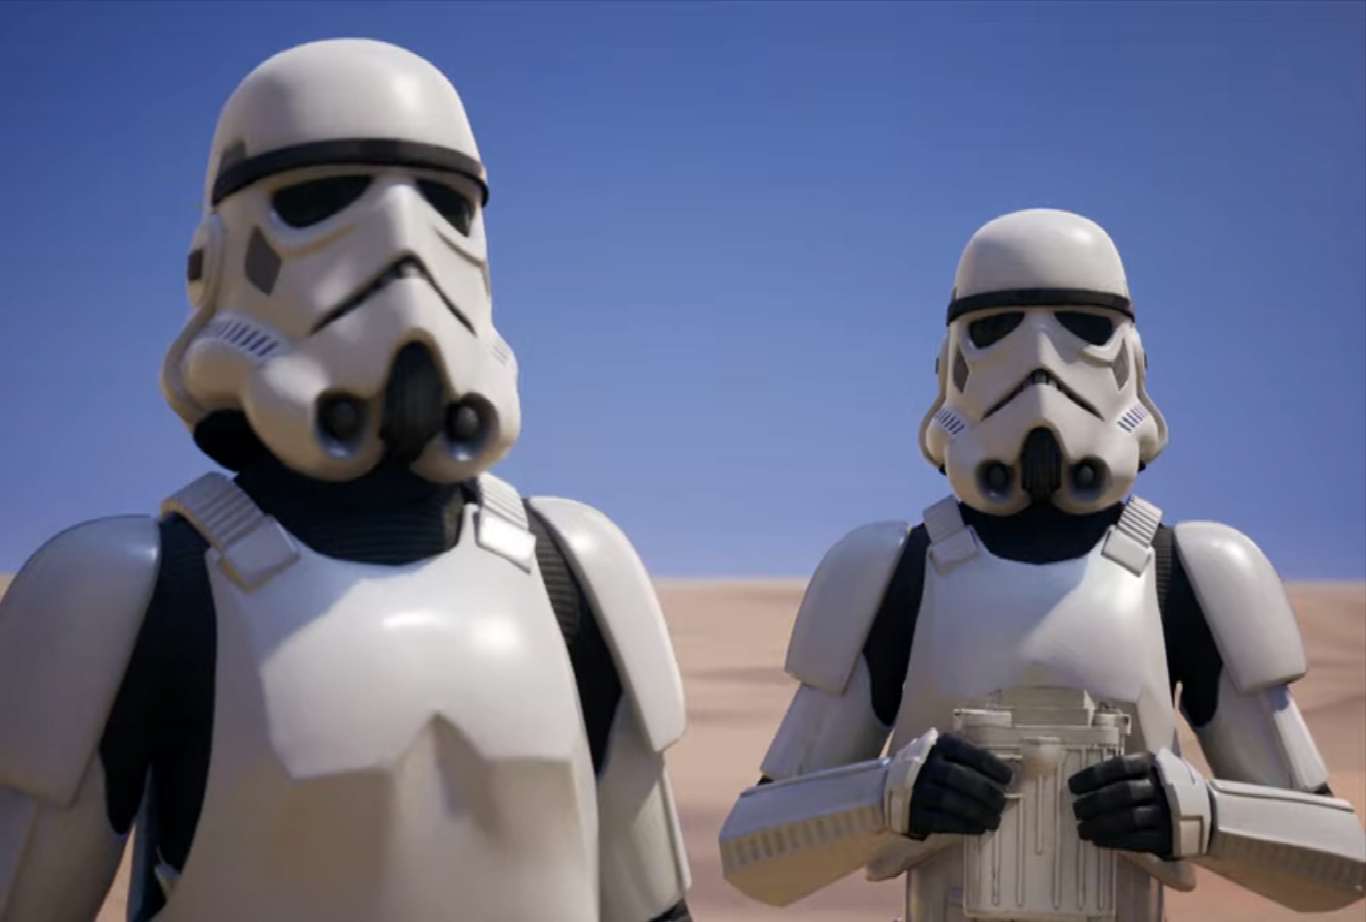 Fortnite And Star Wars Collide To Promote Star Wars: Jedi Fallen Order